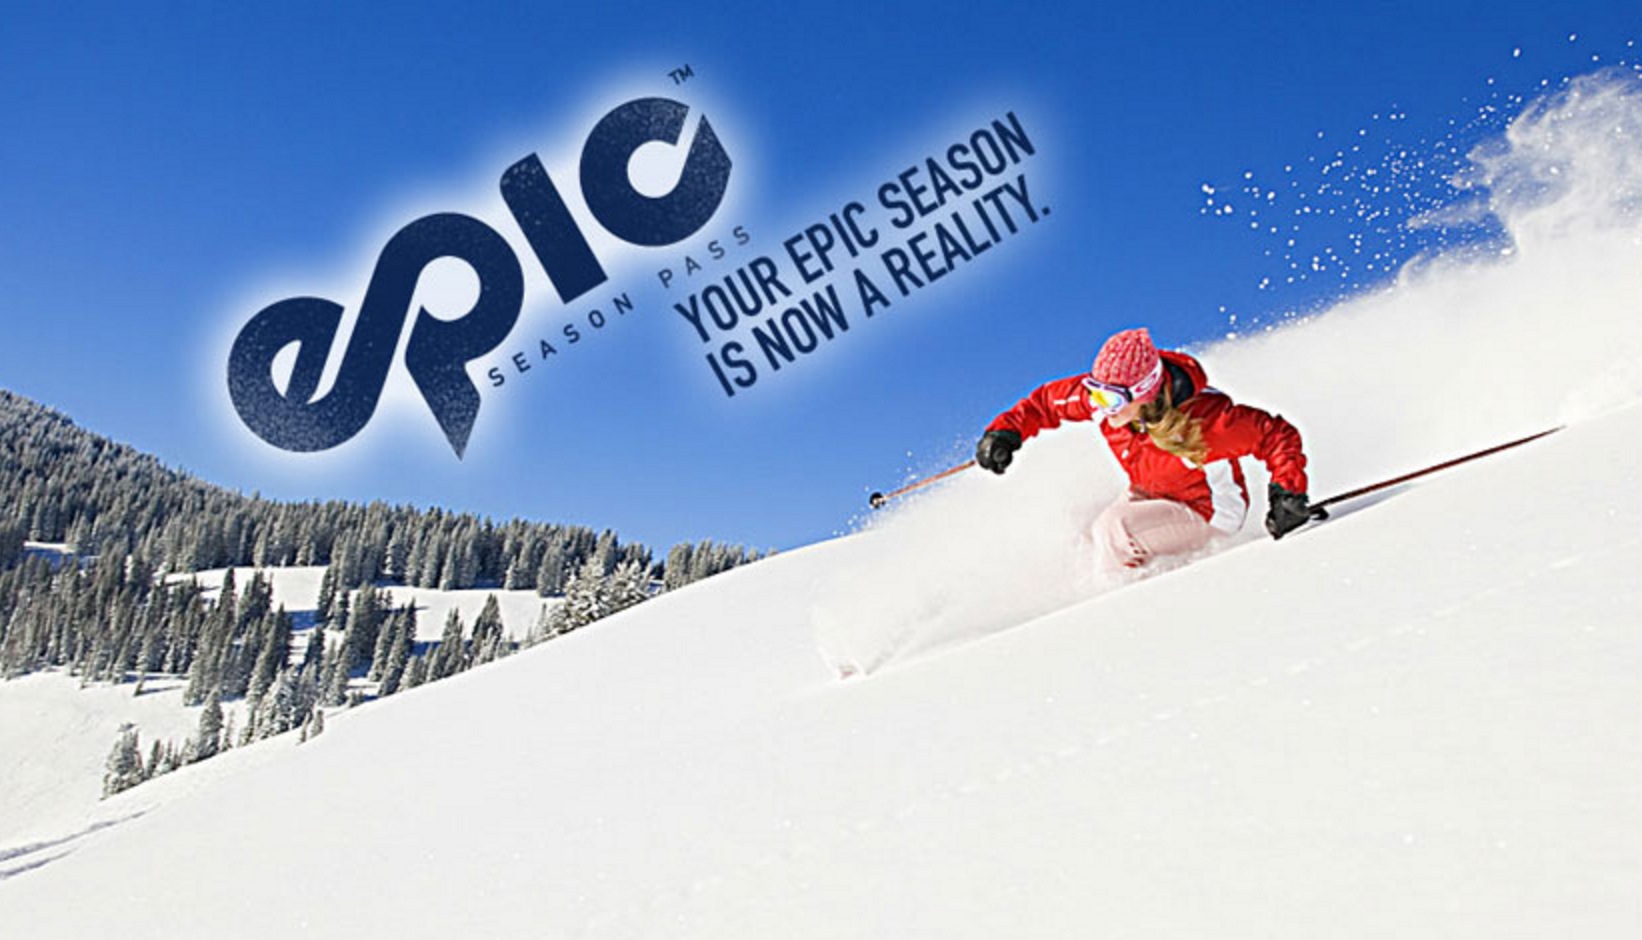 epic ski pass customer service